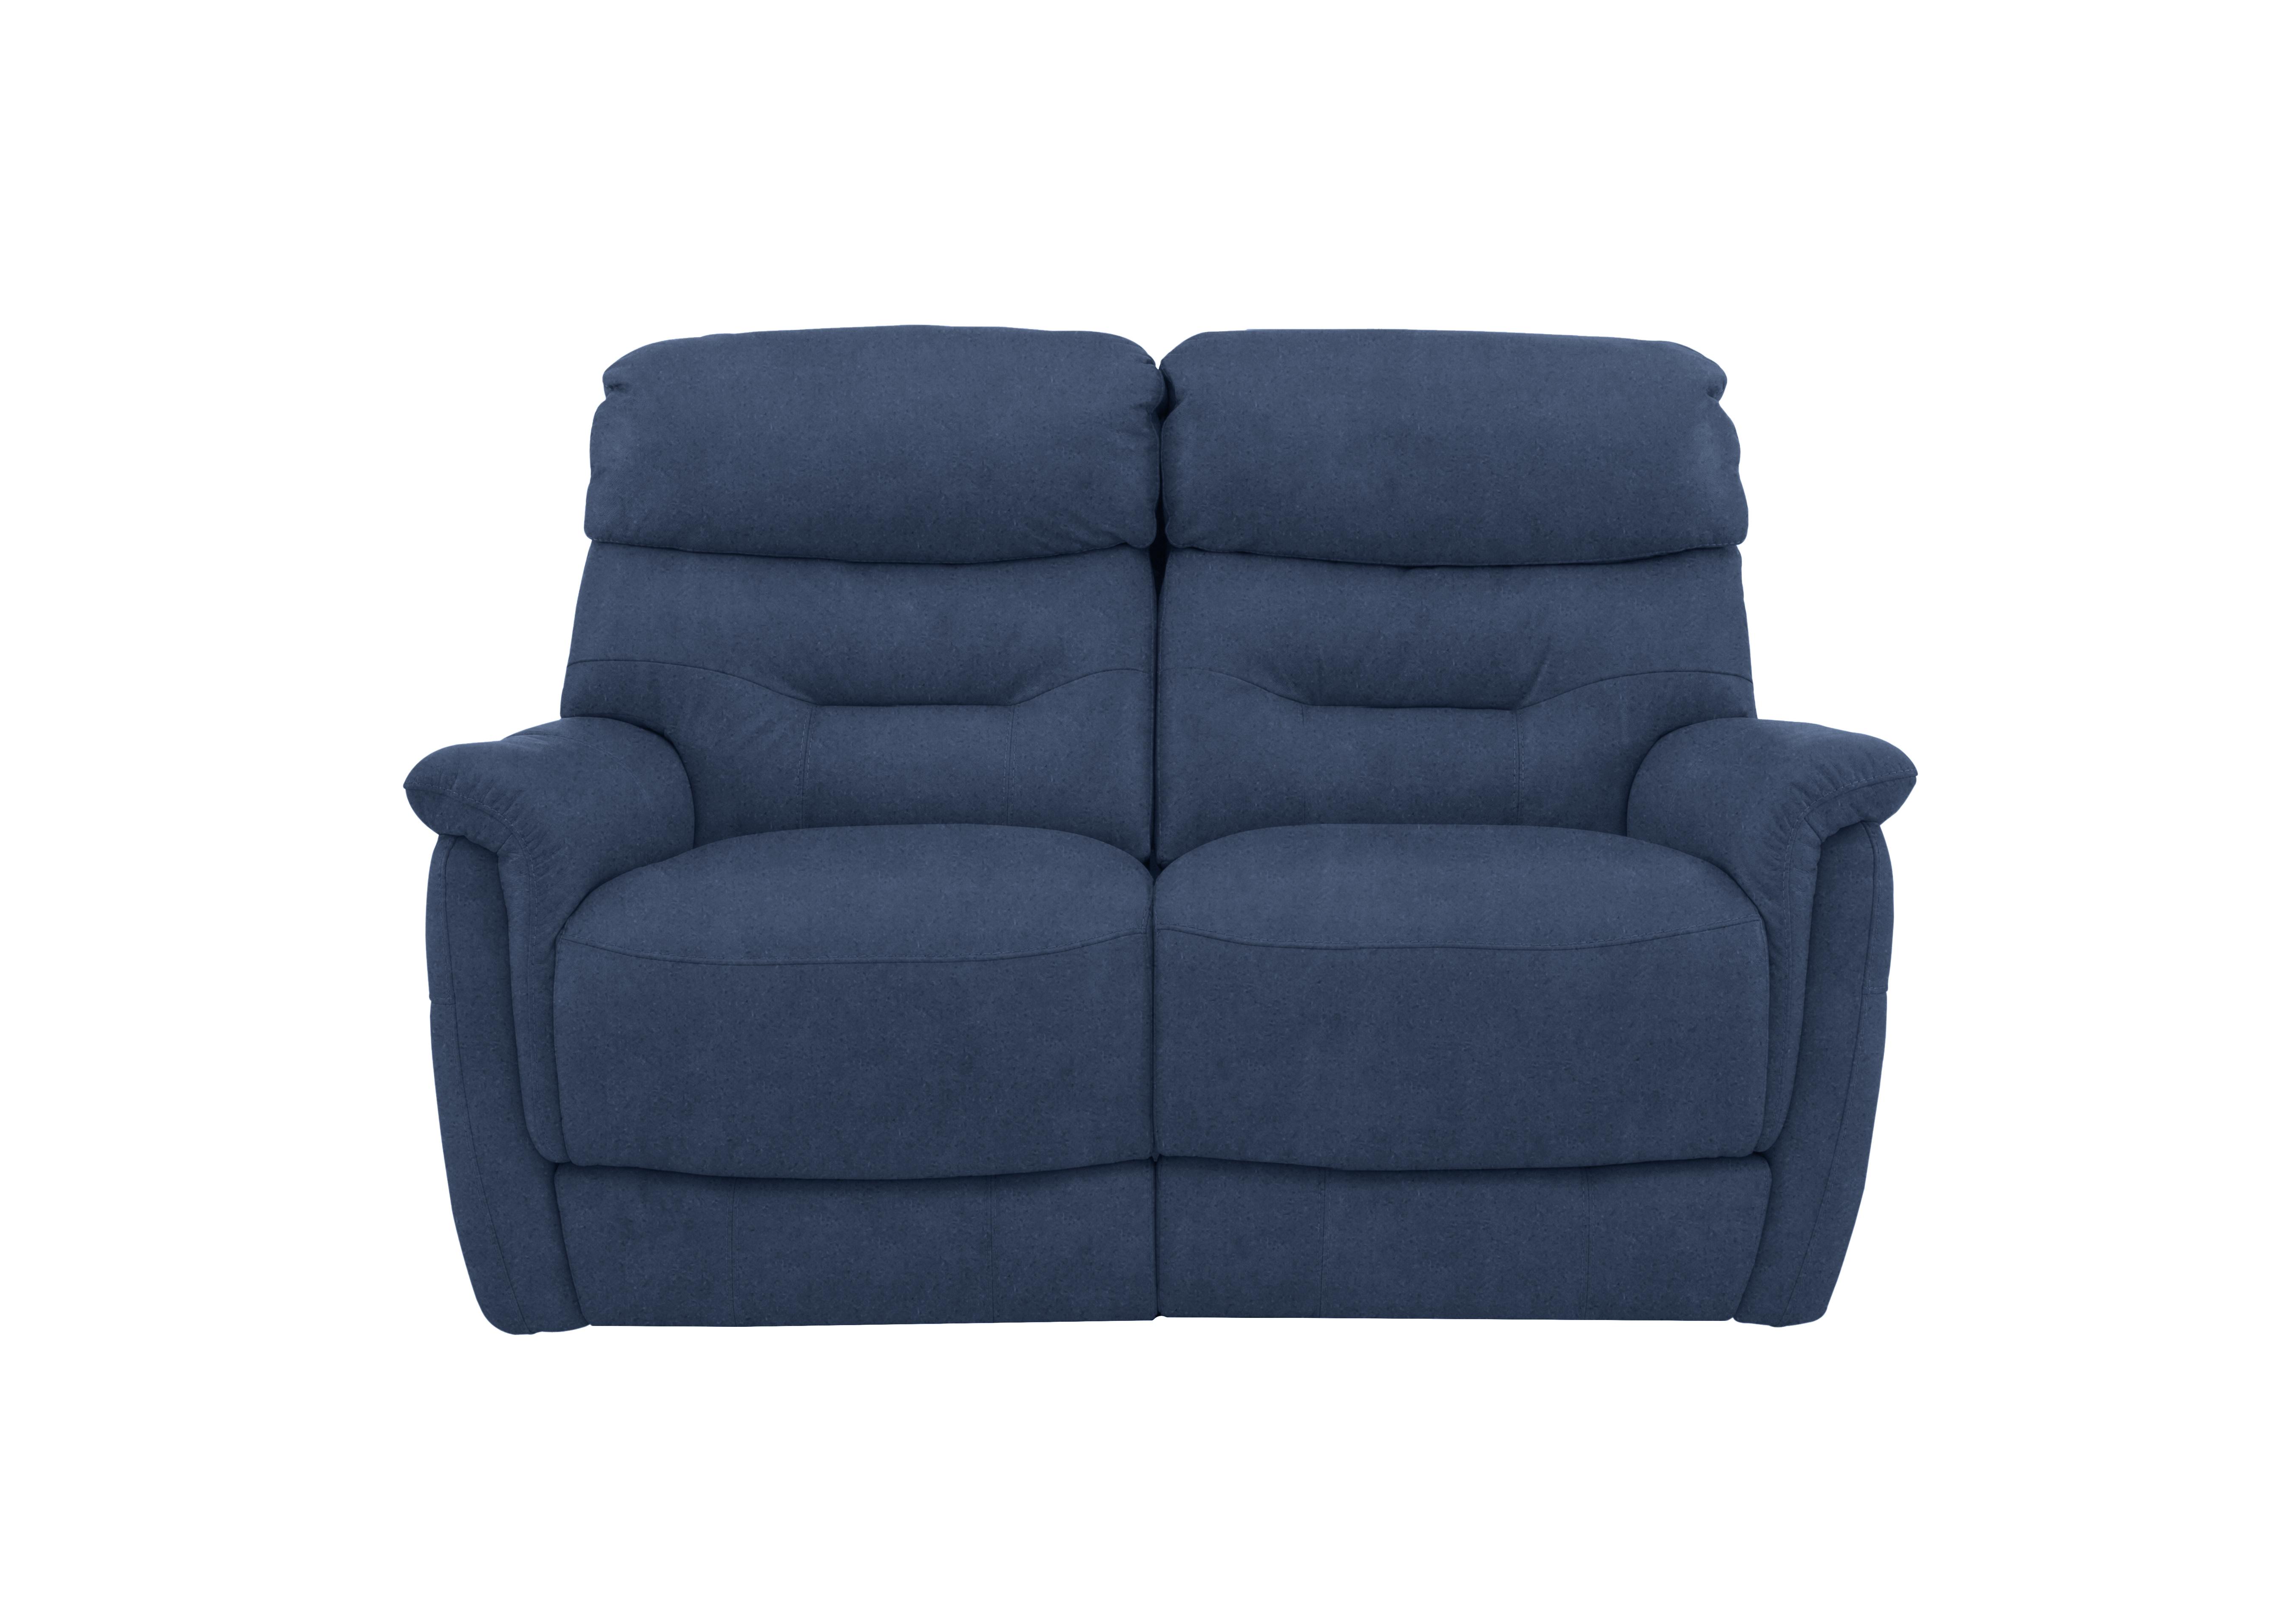 Chicago 2 Seater Fabric Sofa in Bfa-Blj-R10 Blue on Furniture Village